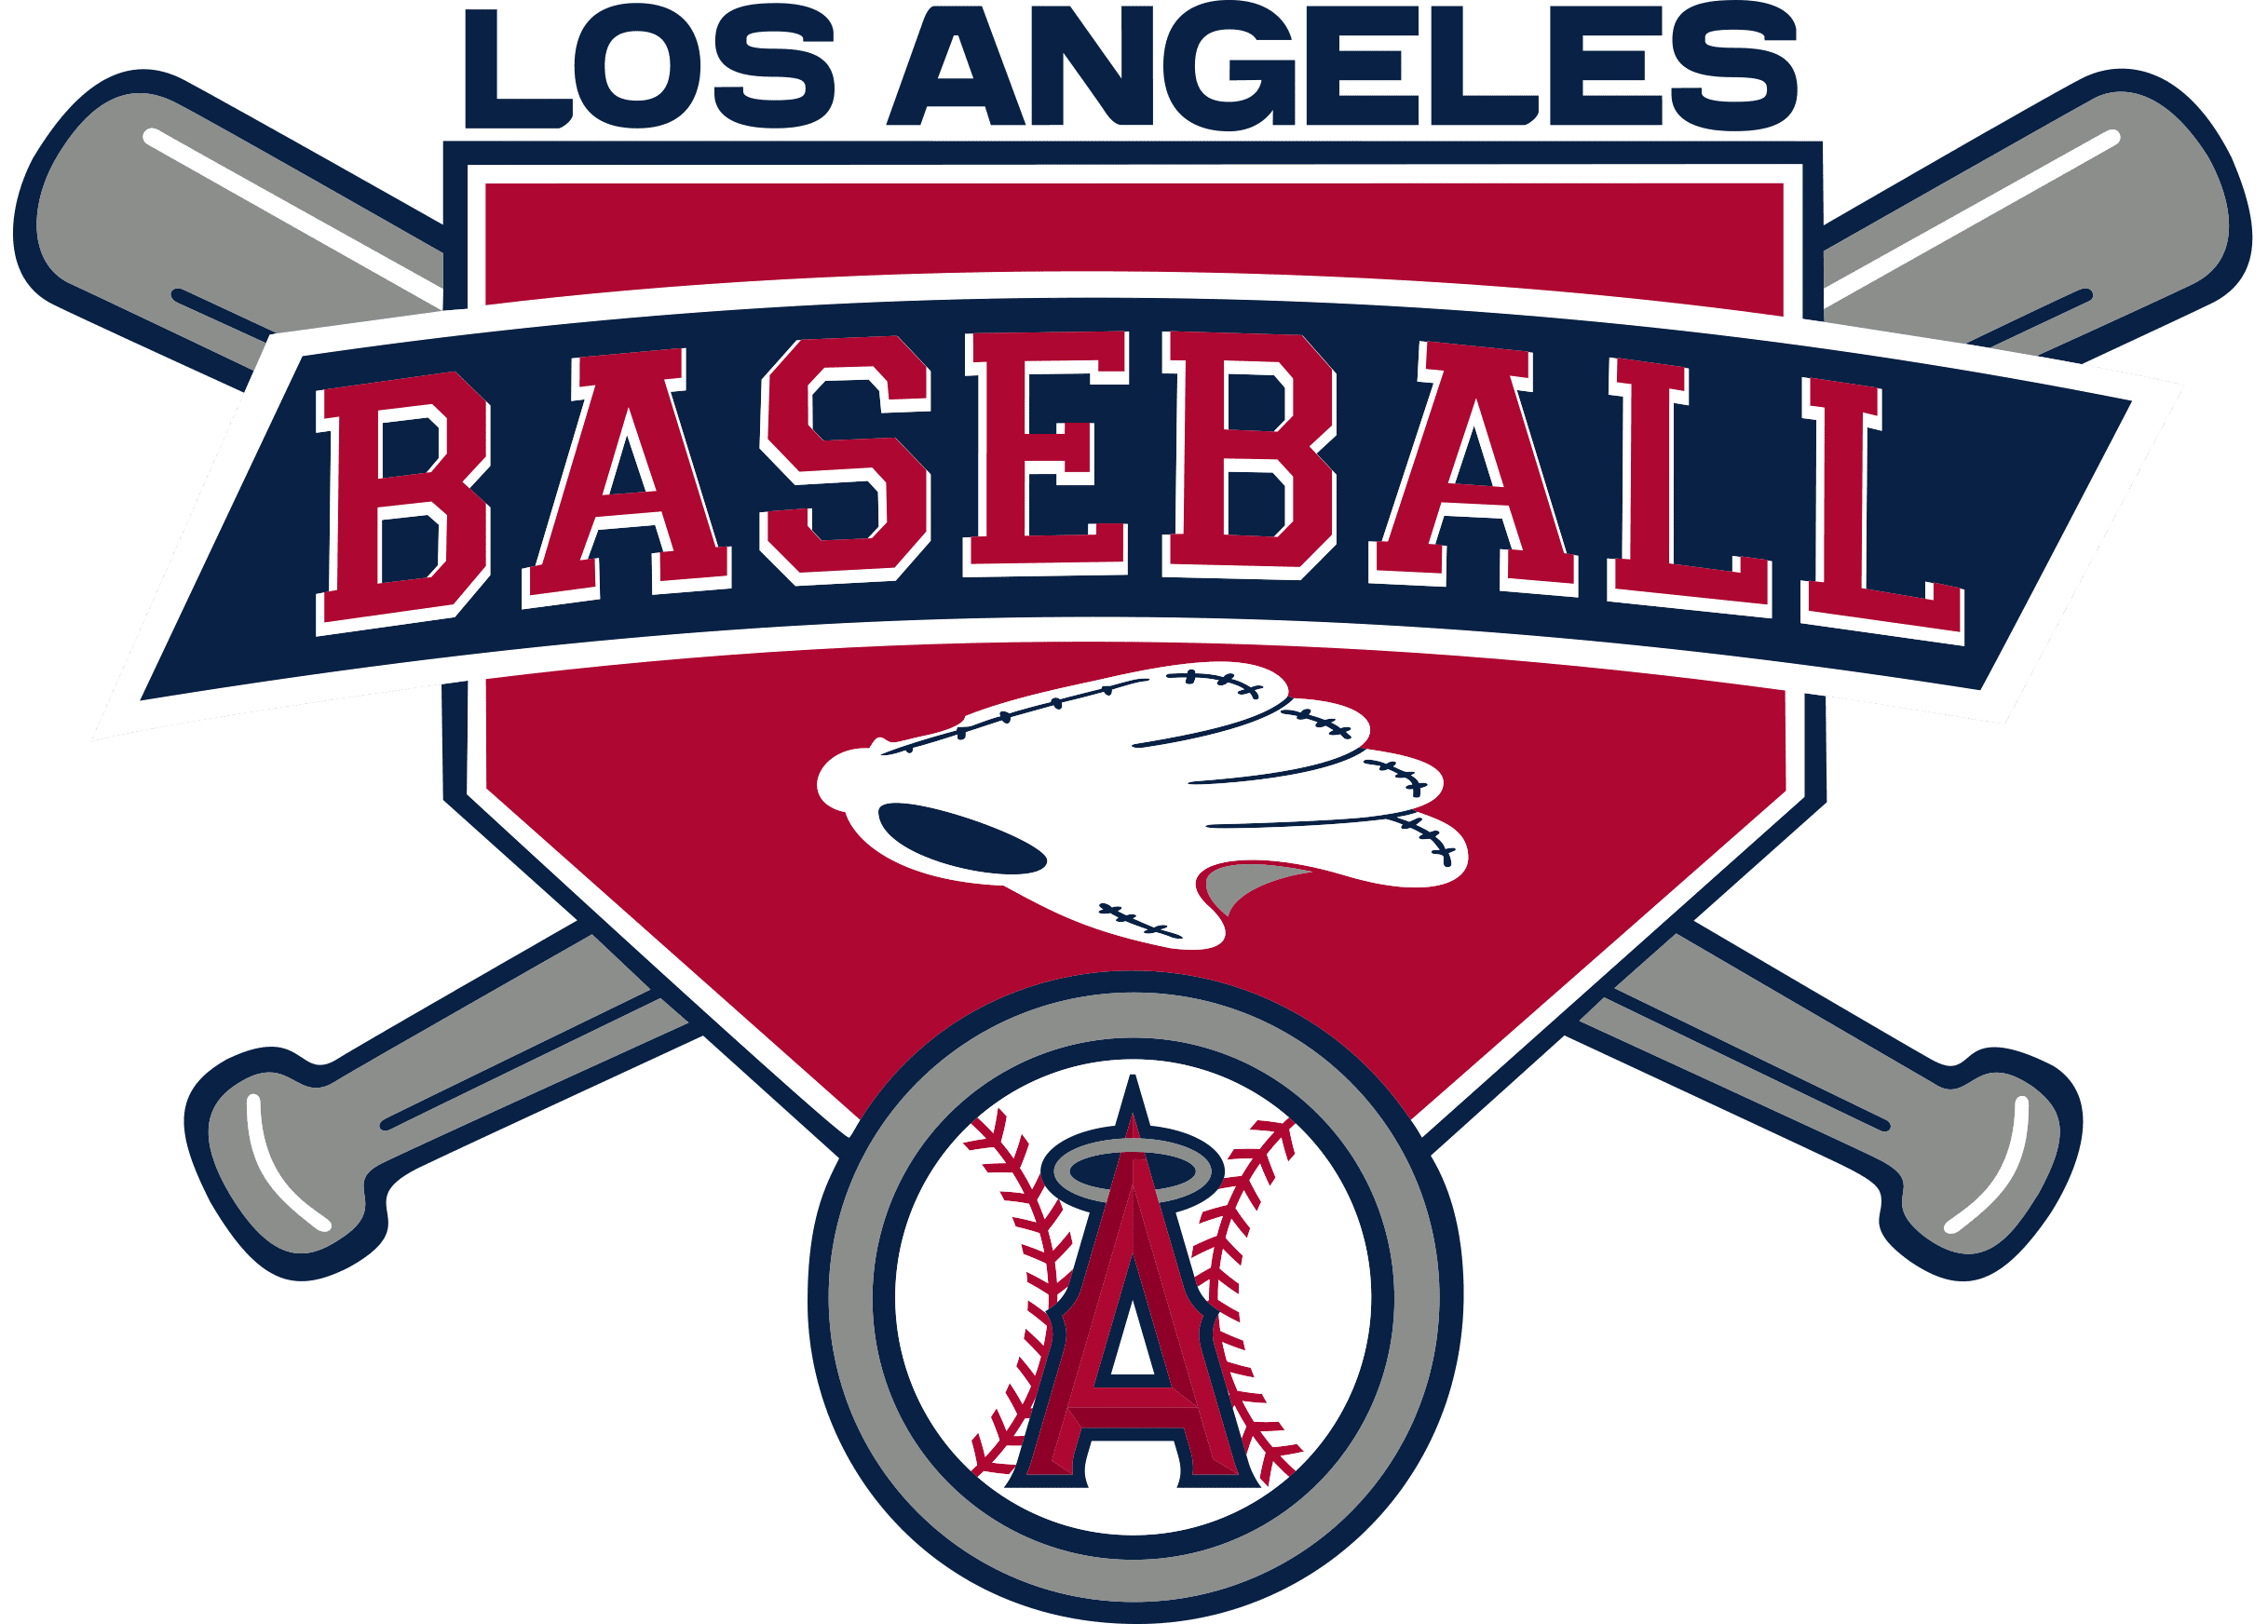 Los Angeles Angels Mlb Svg Cut Files Baseball Clipart Bundle